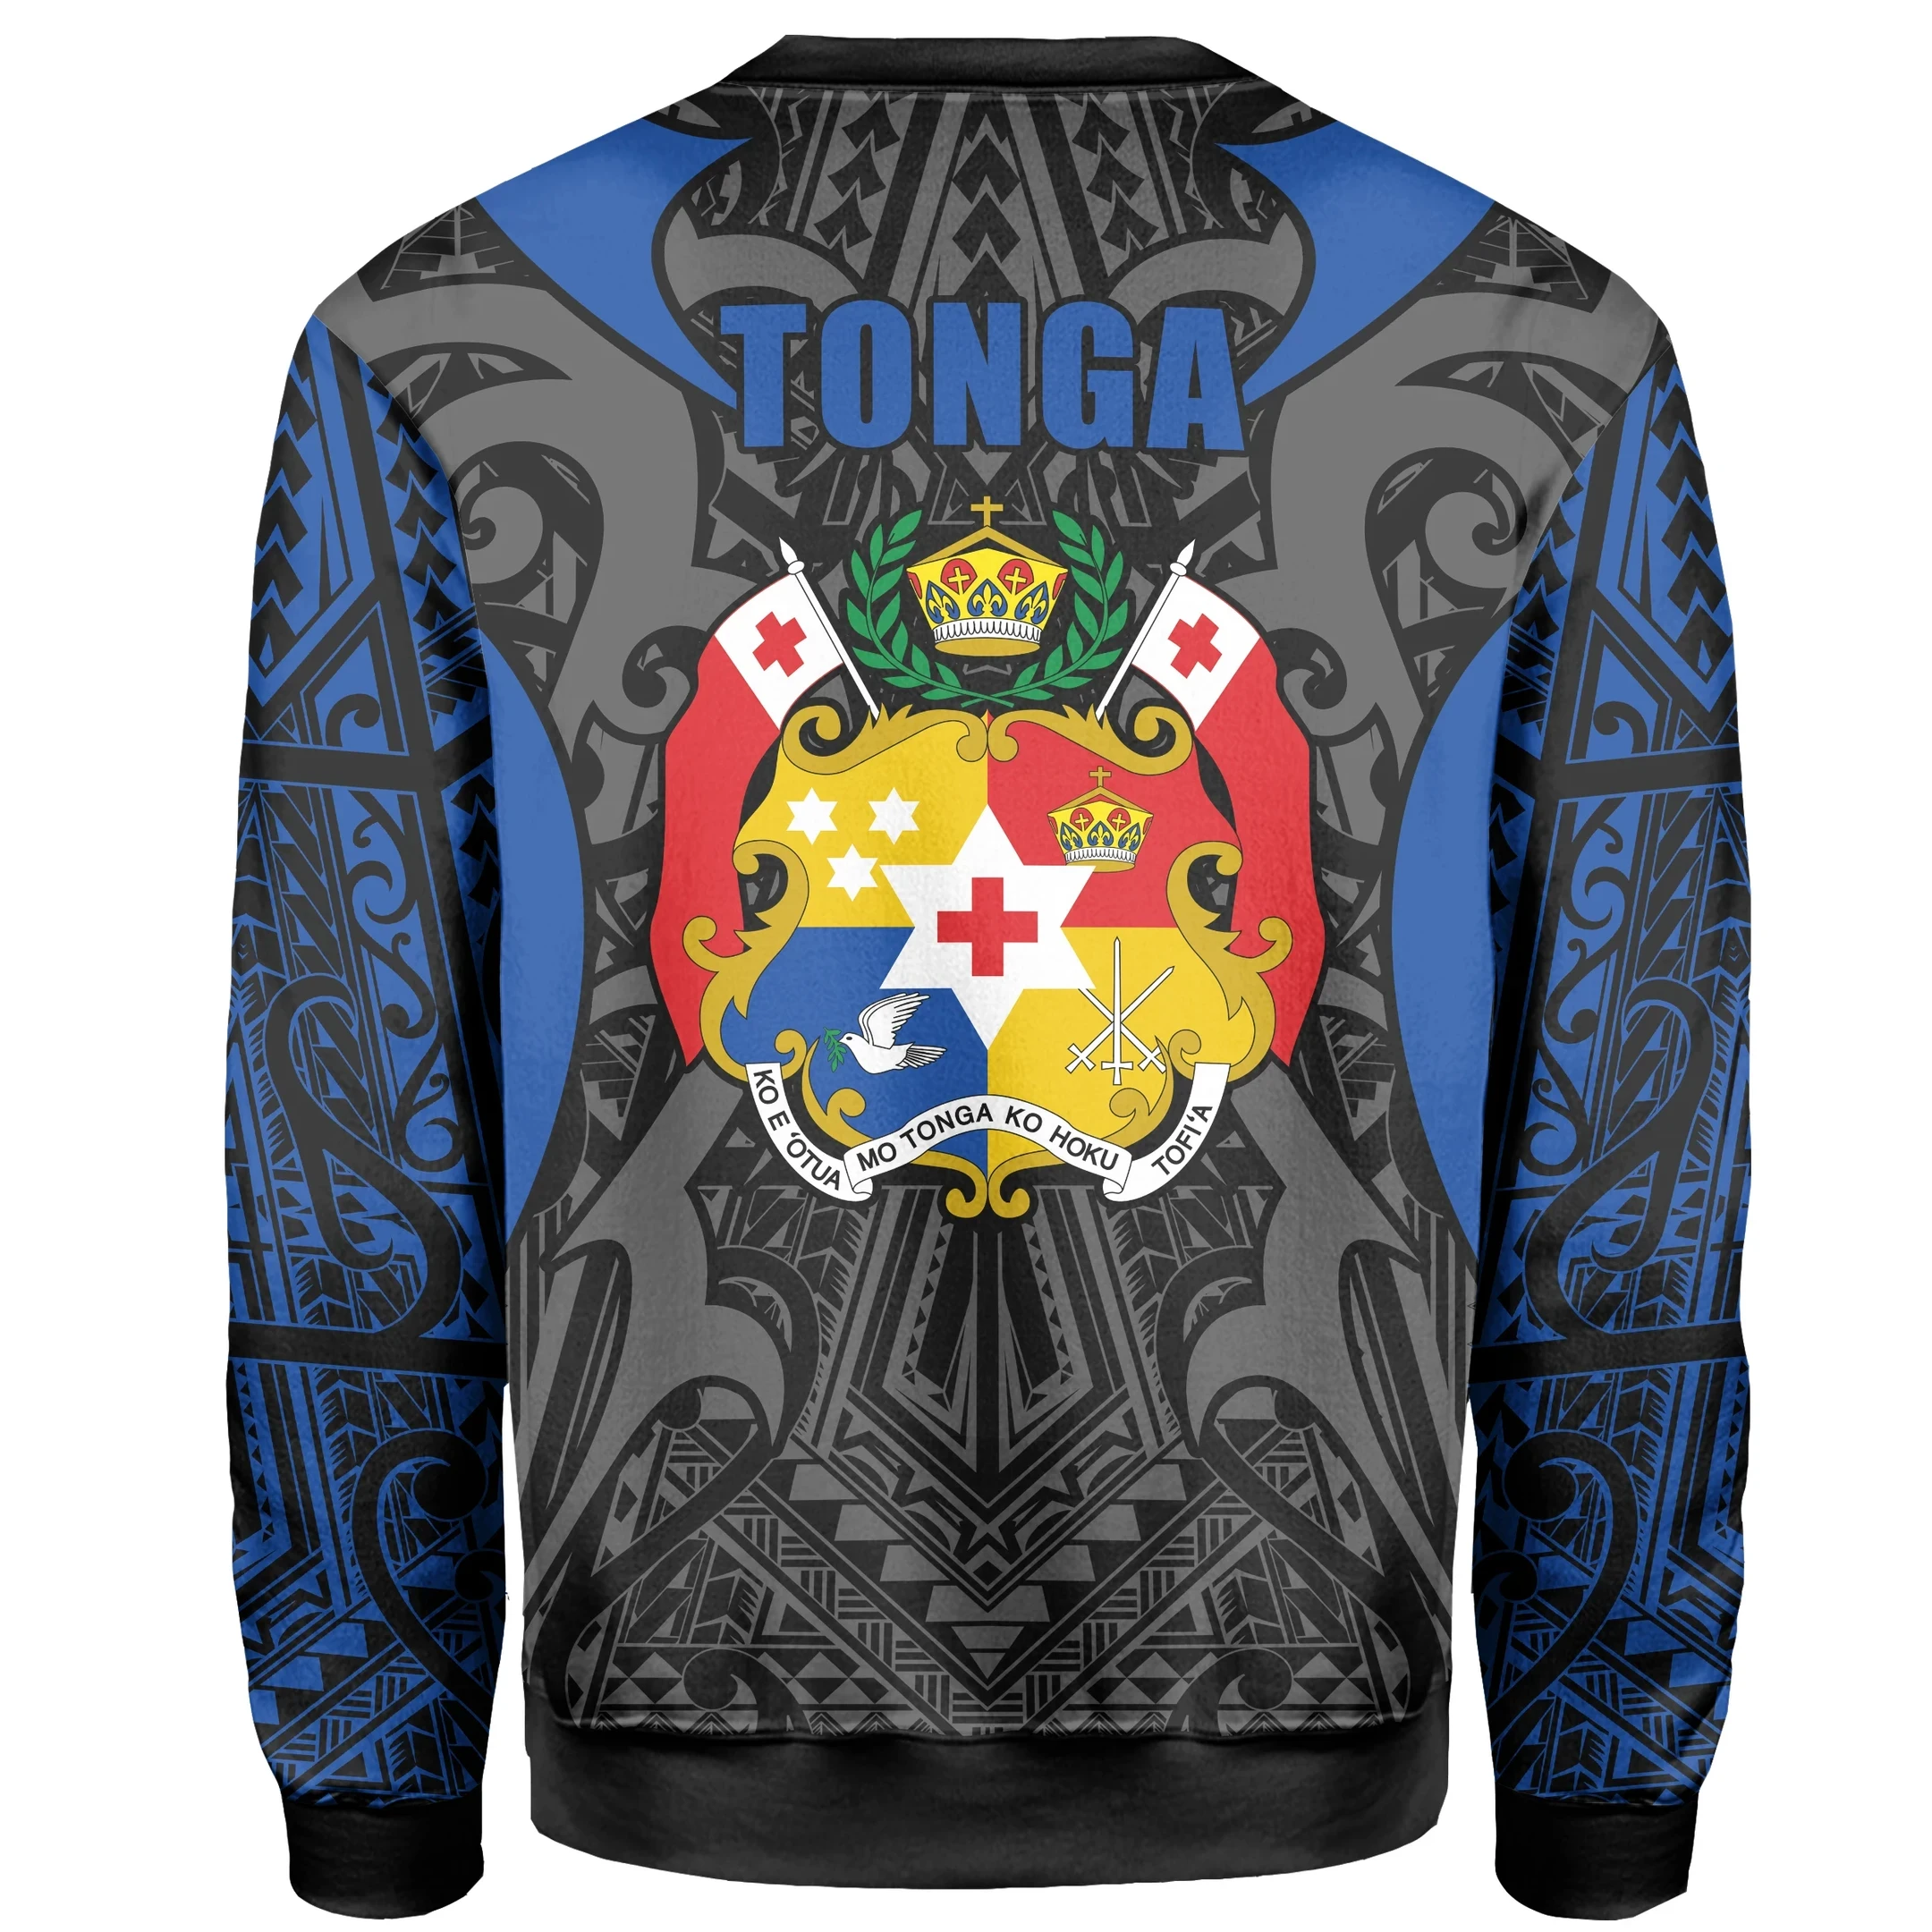 Tonga Sweatshirt - Kingdom of Tonga Black Blue J0